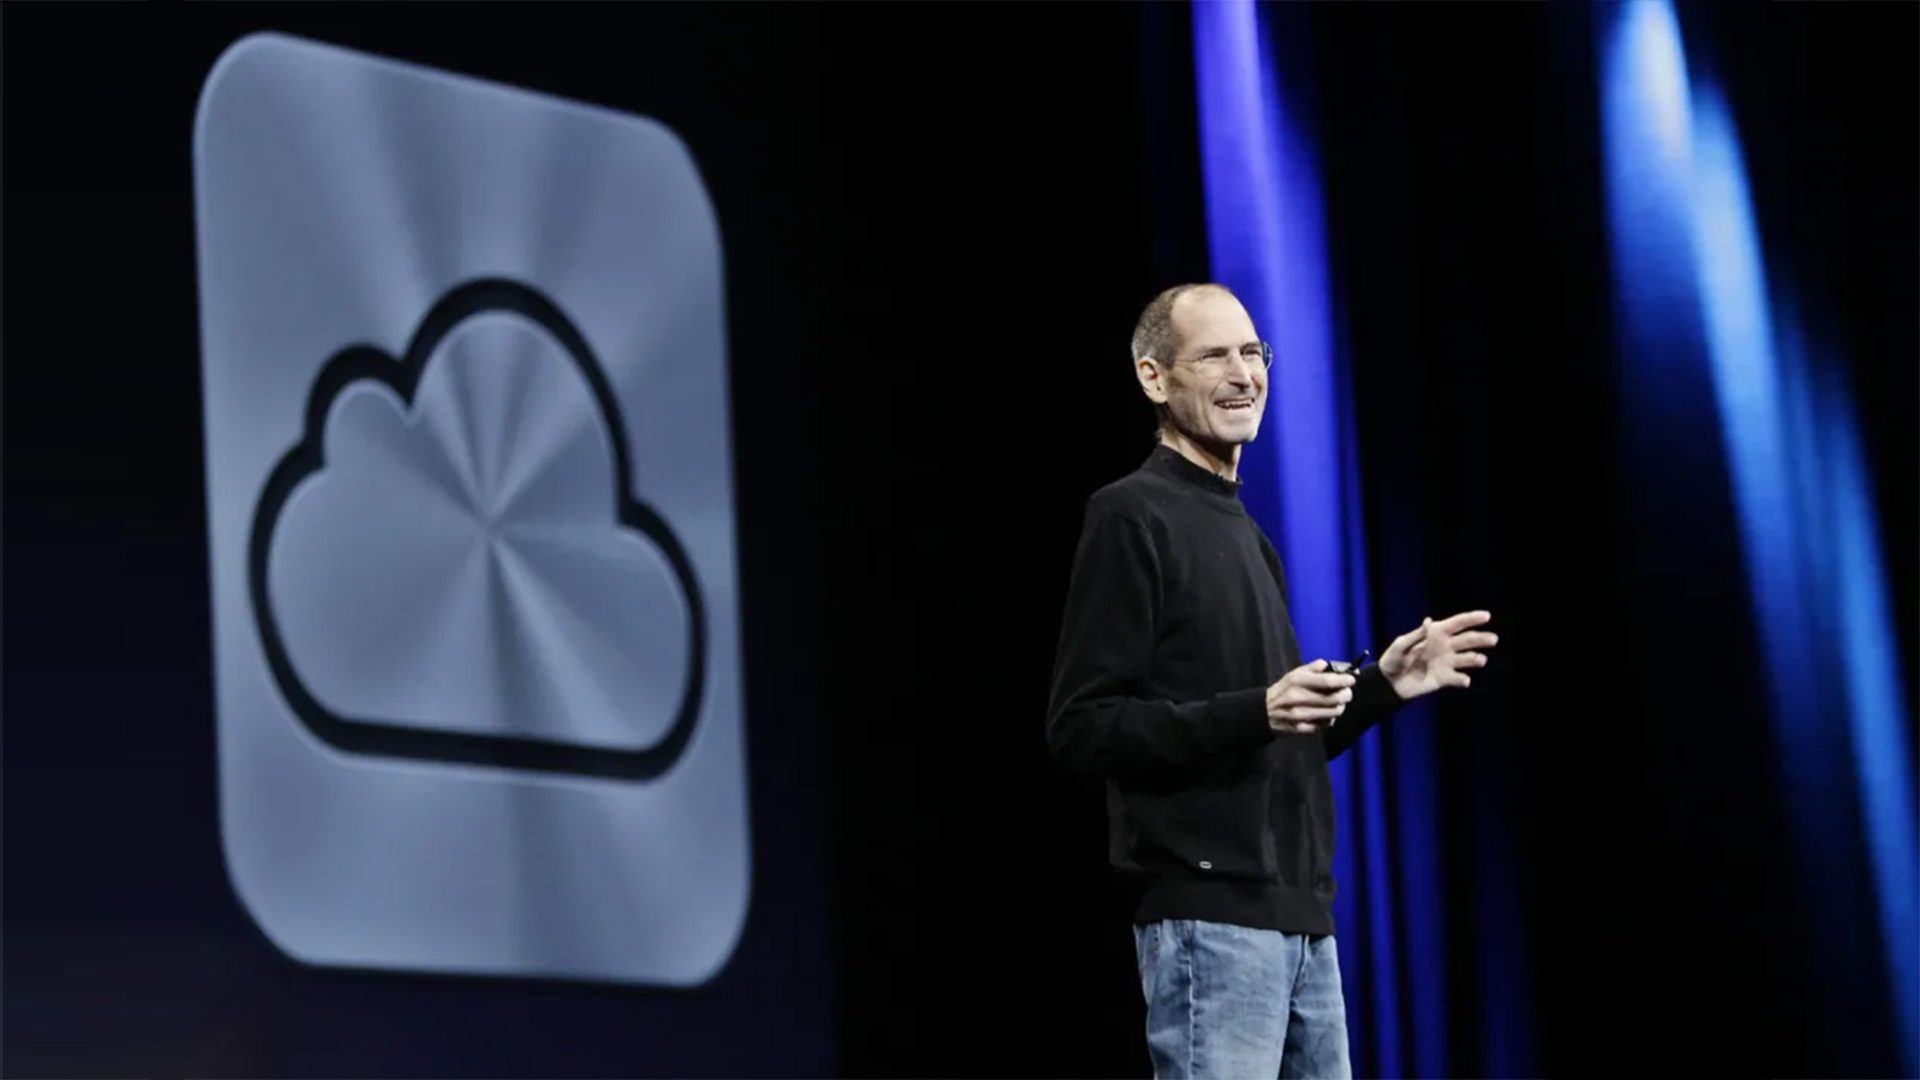 Steve Jobs on stage announcing Apple's iCloud